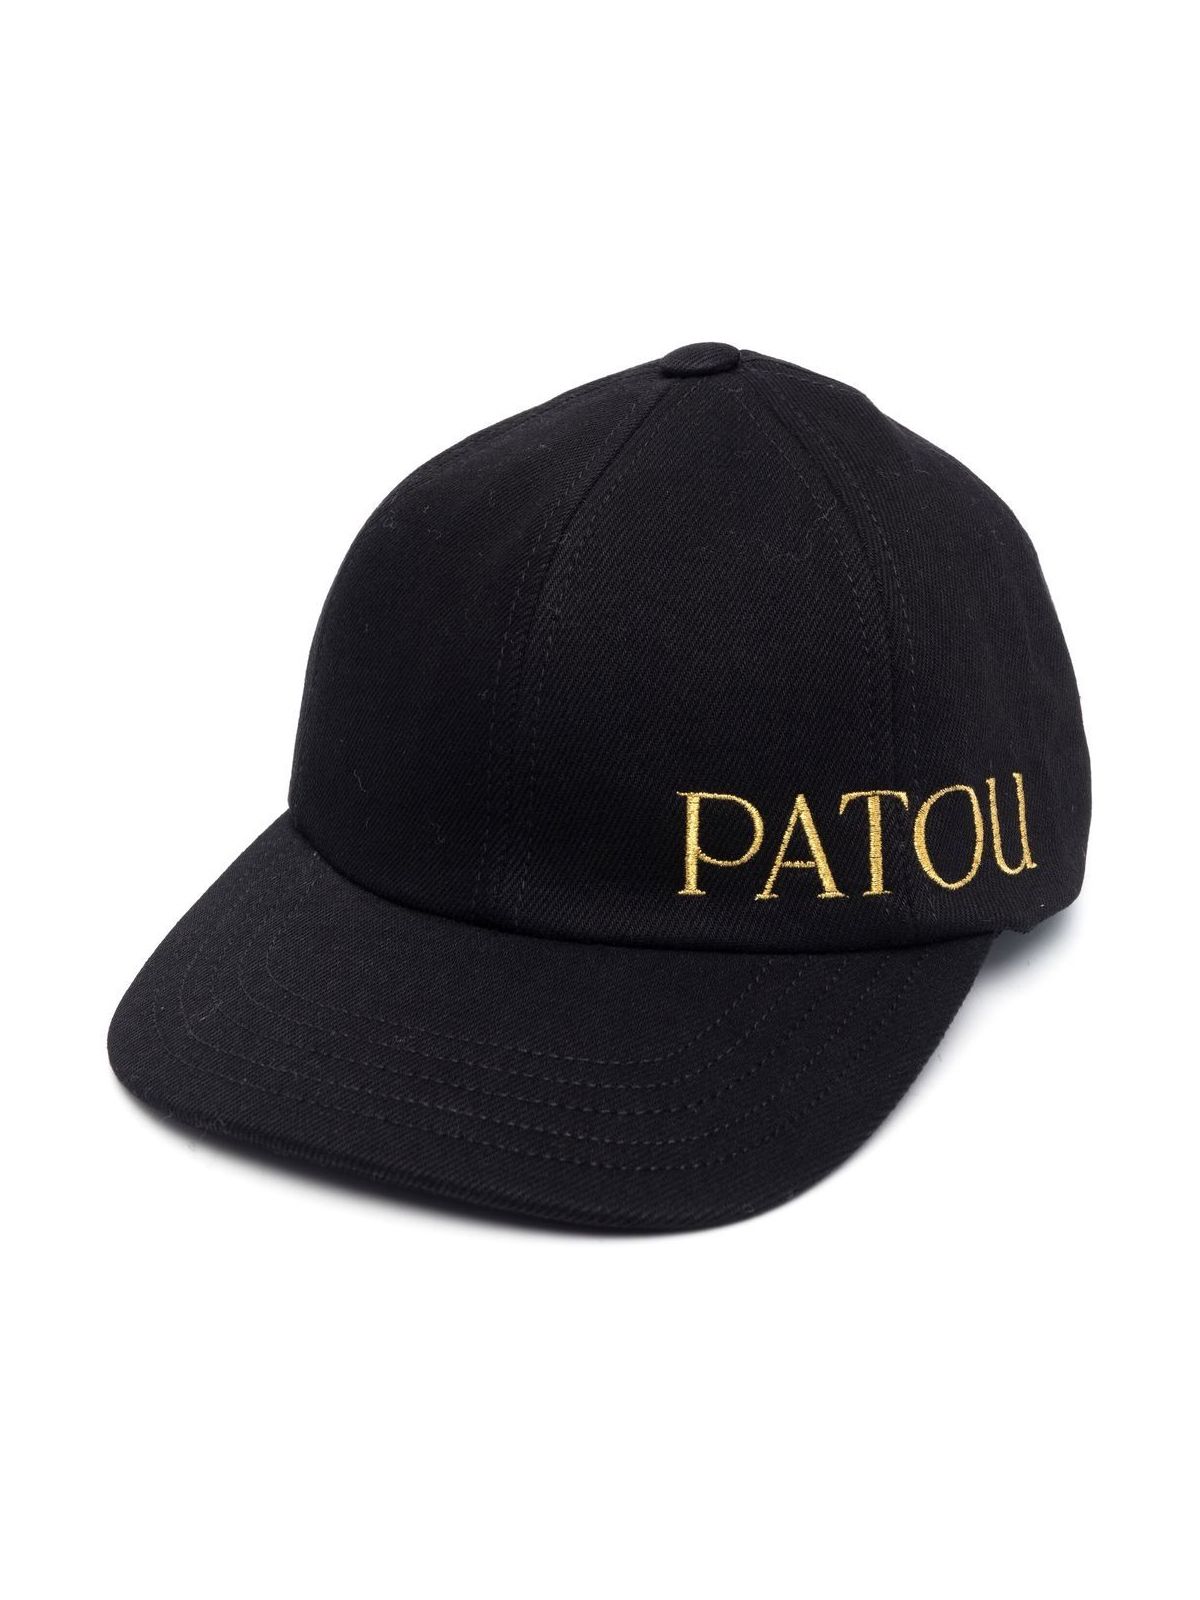 PATOU UNISEX PATOU CAP,AC0400081999B